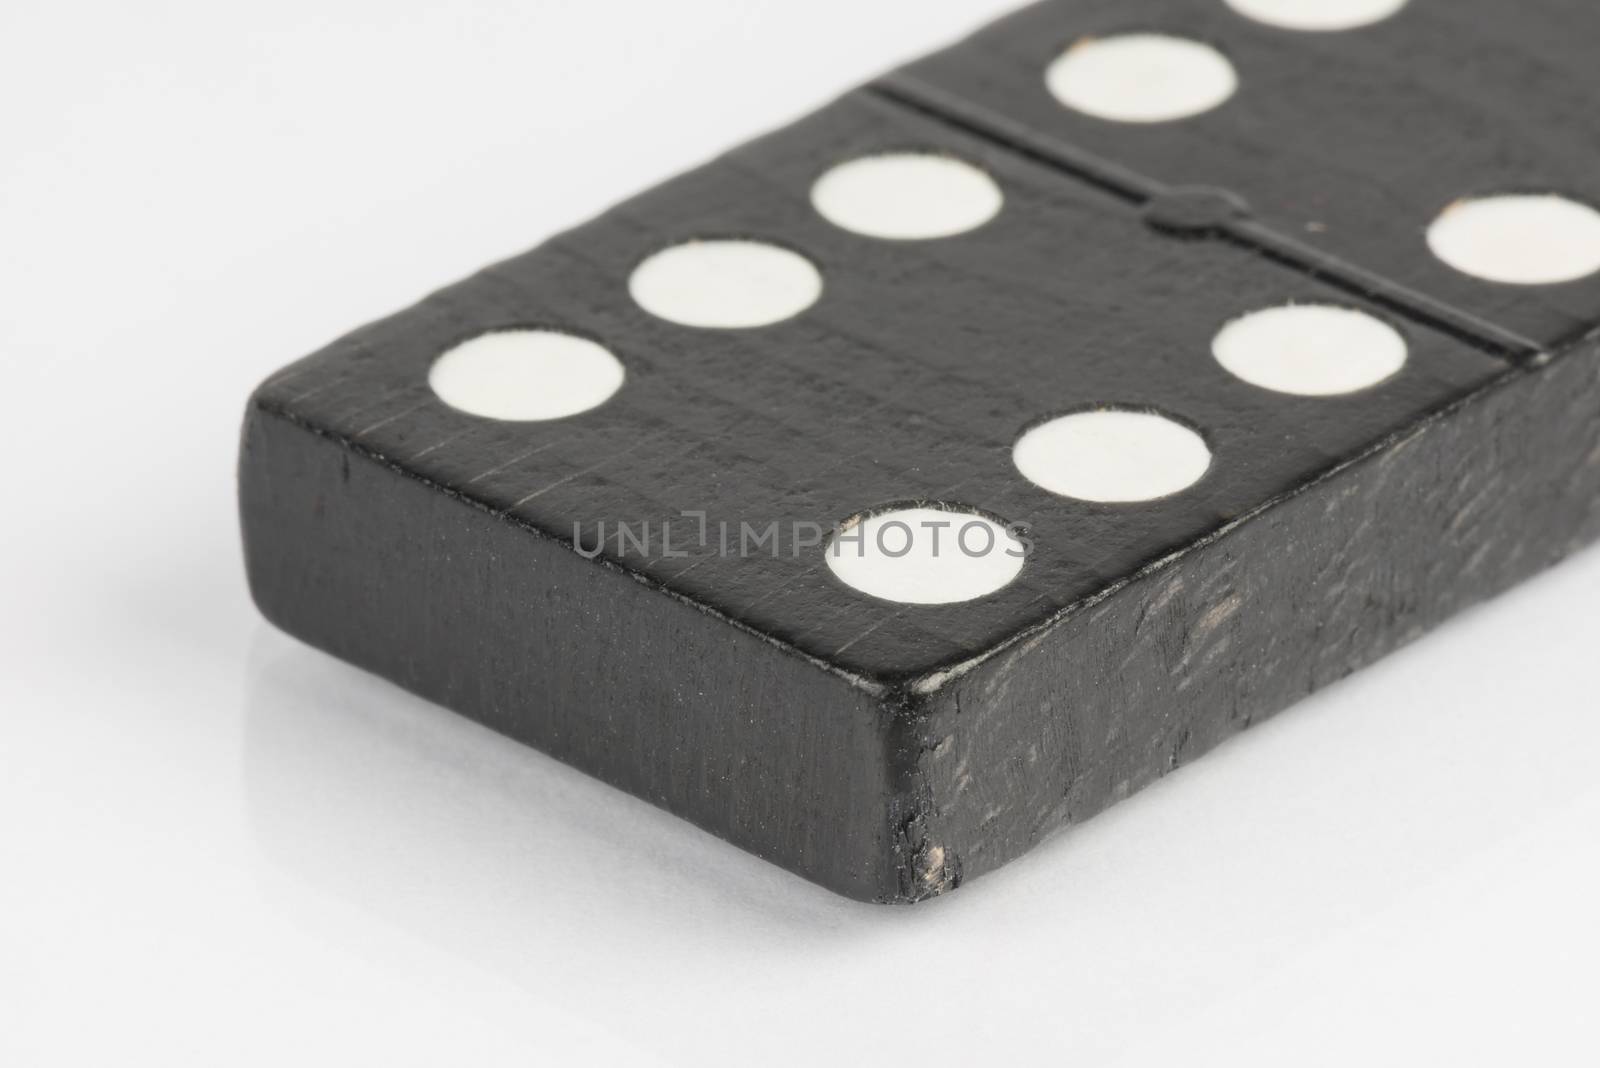 Lying black domino brick with white dots
